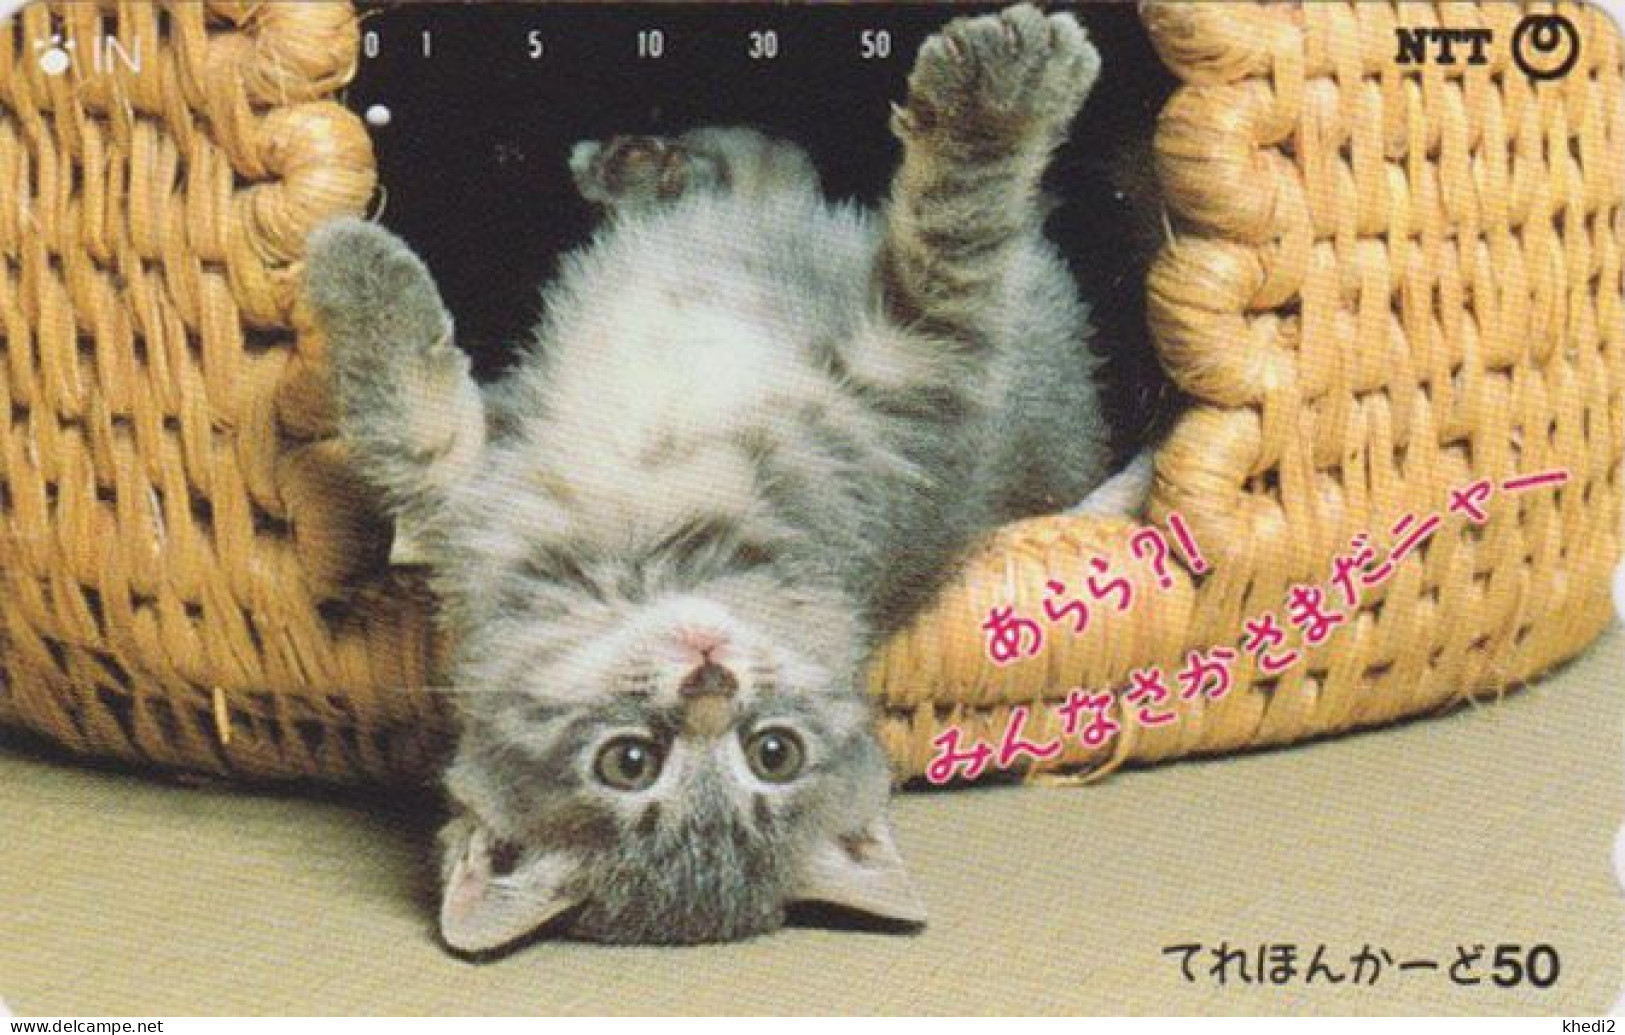 Télécarte JAPON / NTT 251-001 B ** 2 NOTCHES 1 PUNCH ** - ANIMAL CHAT - CAT JAPAN Phonecard - Chats